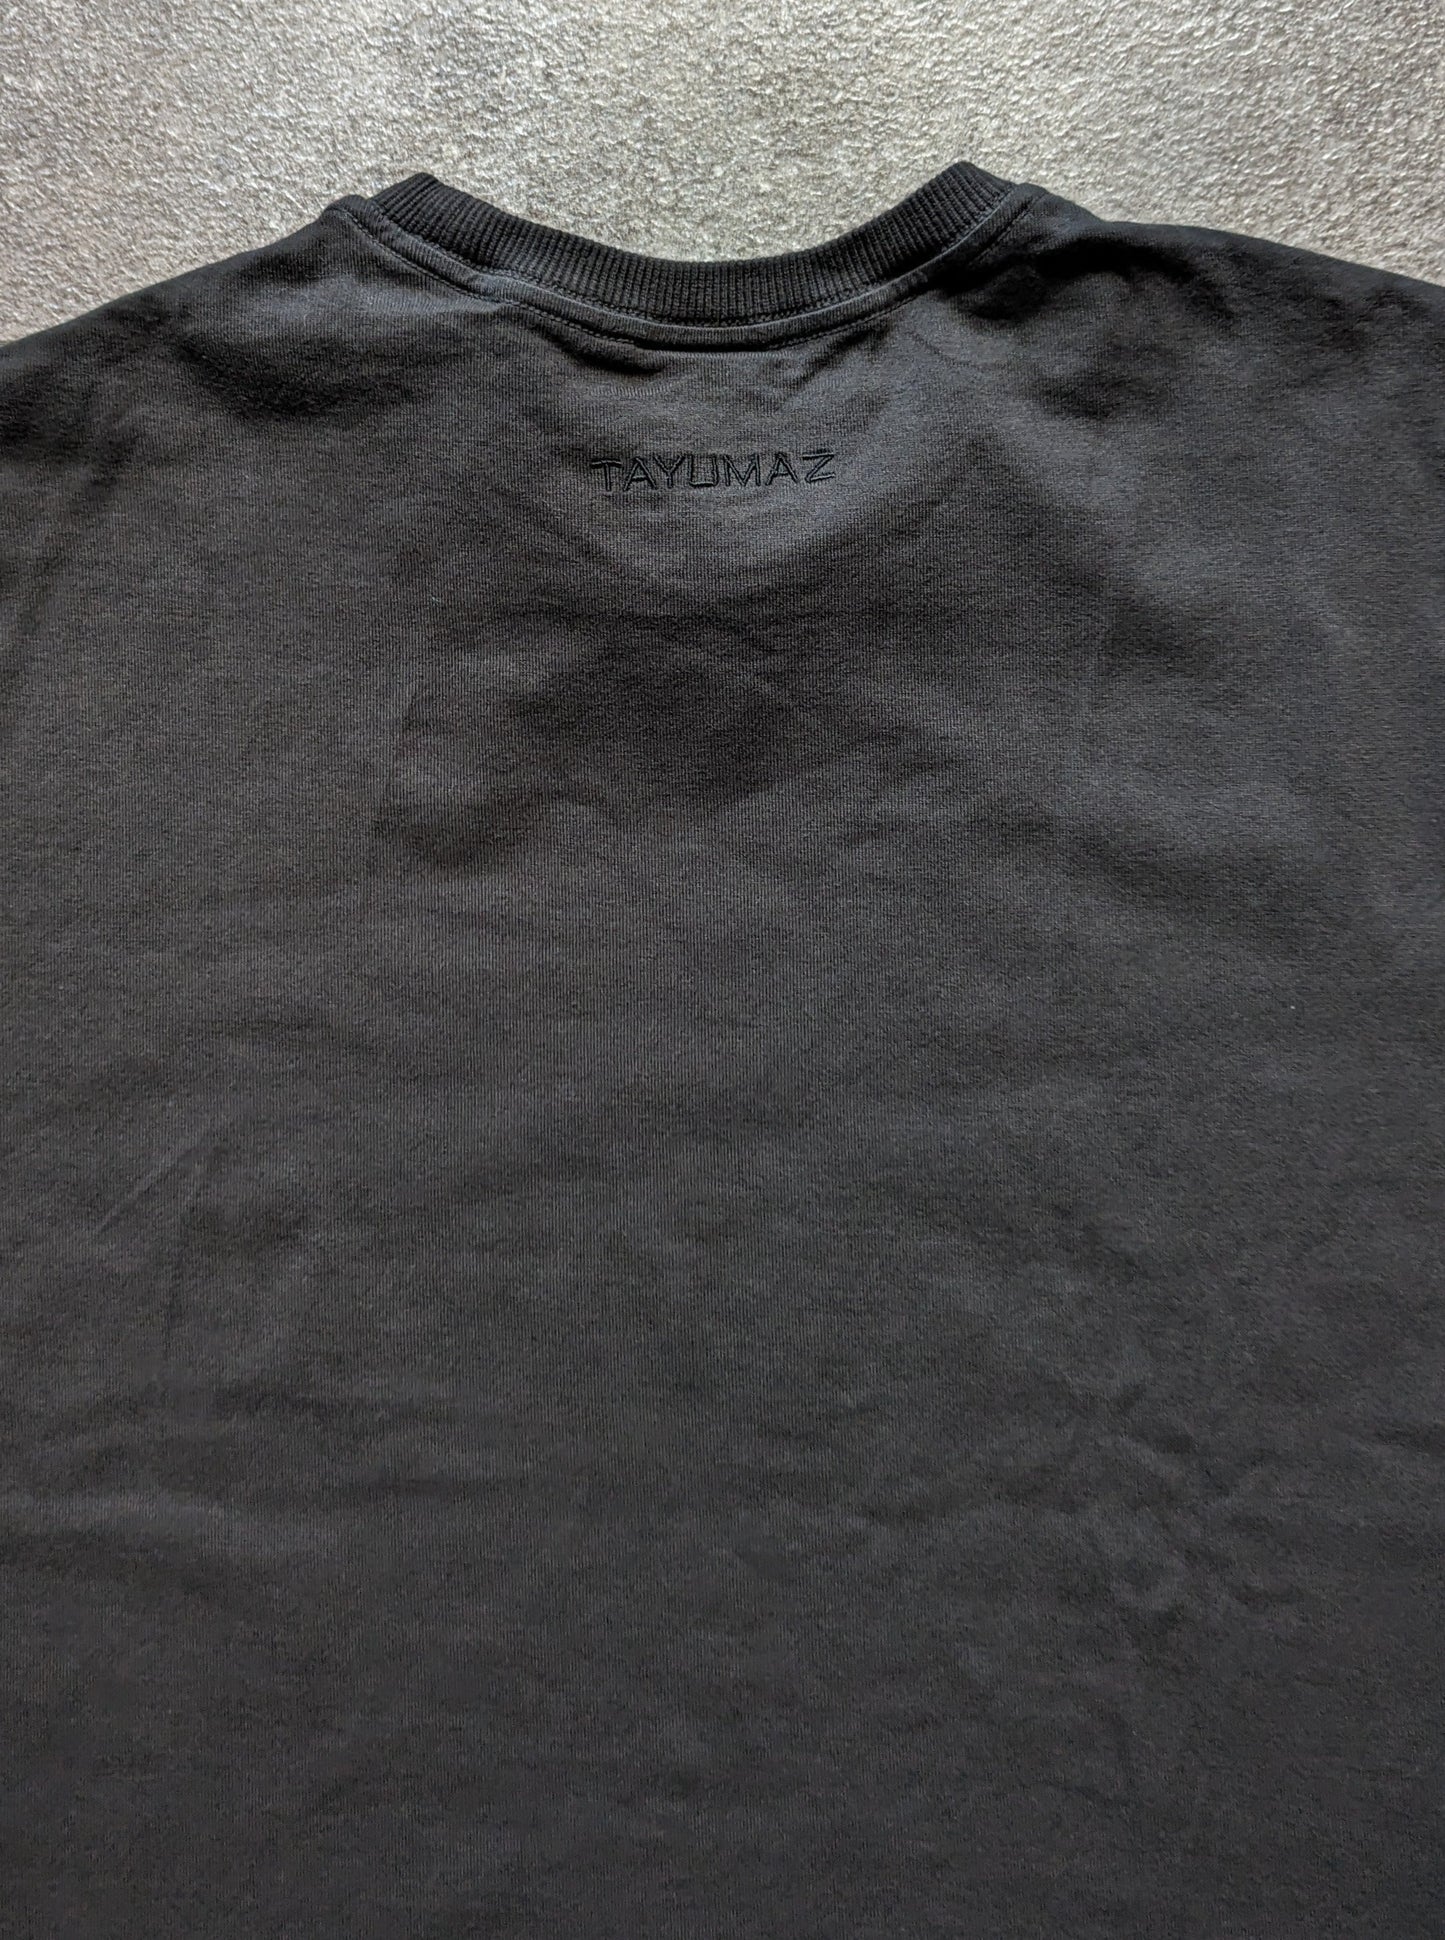 Washed cotton T-shirt black